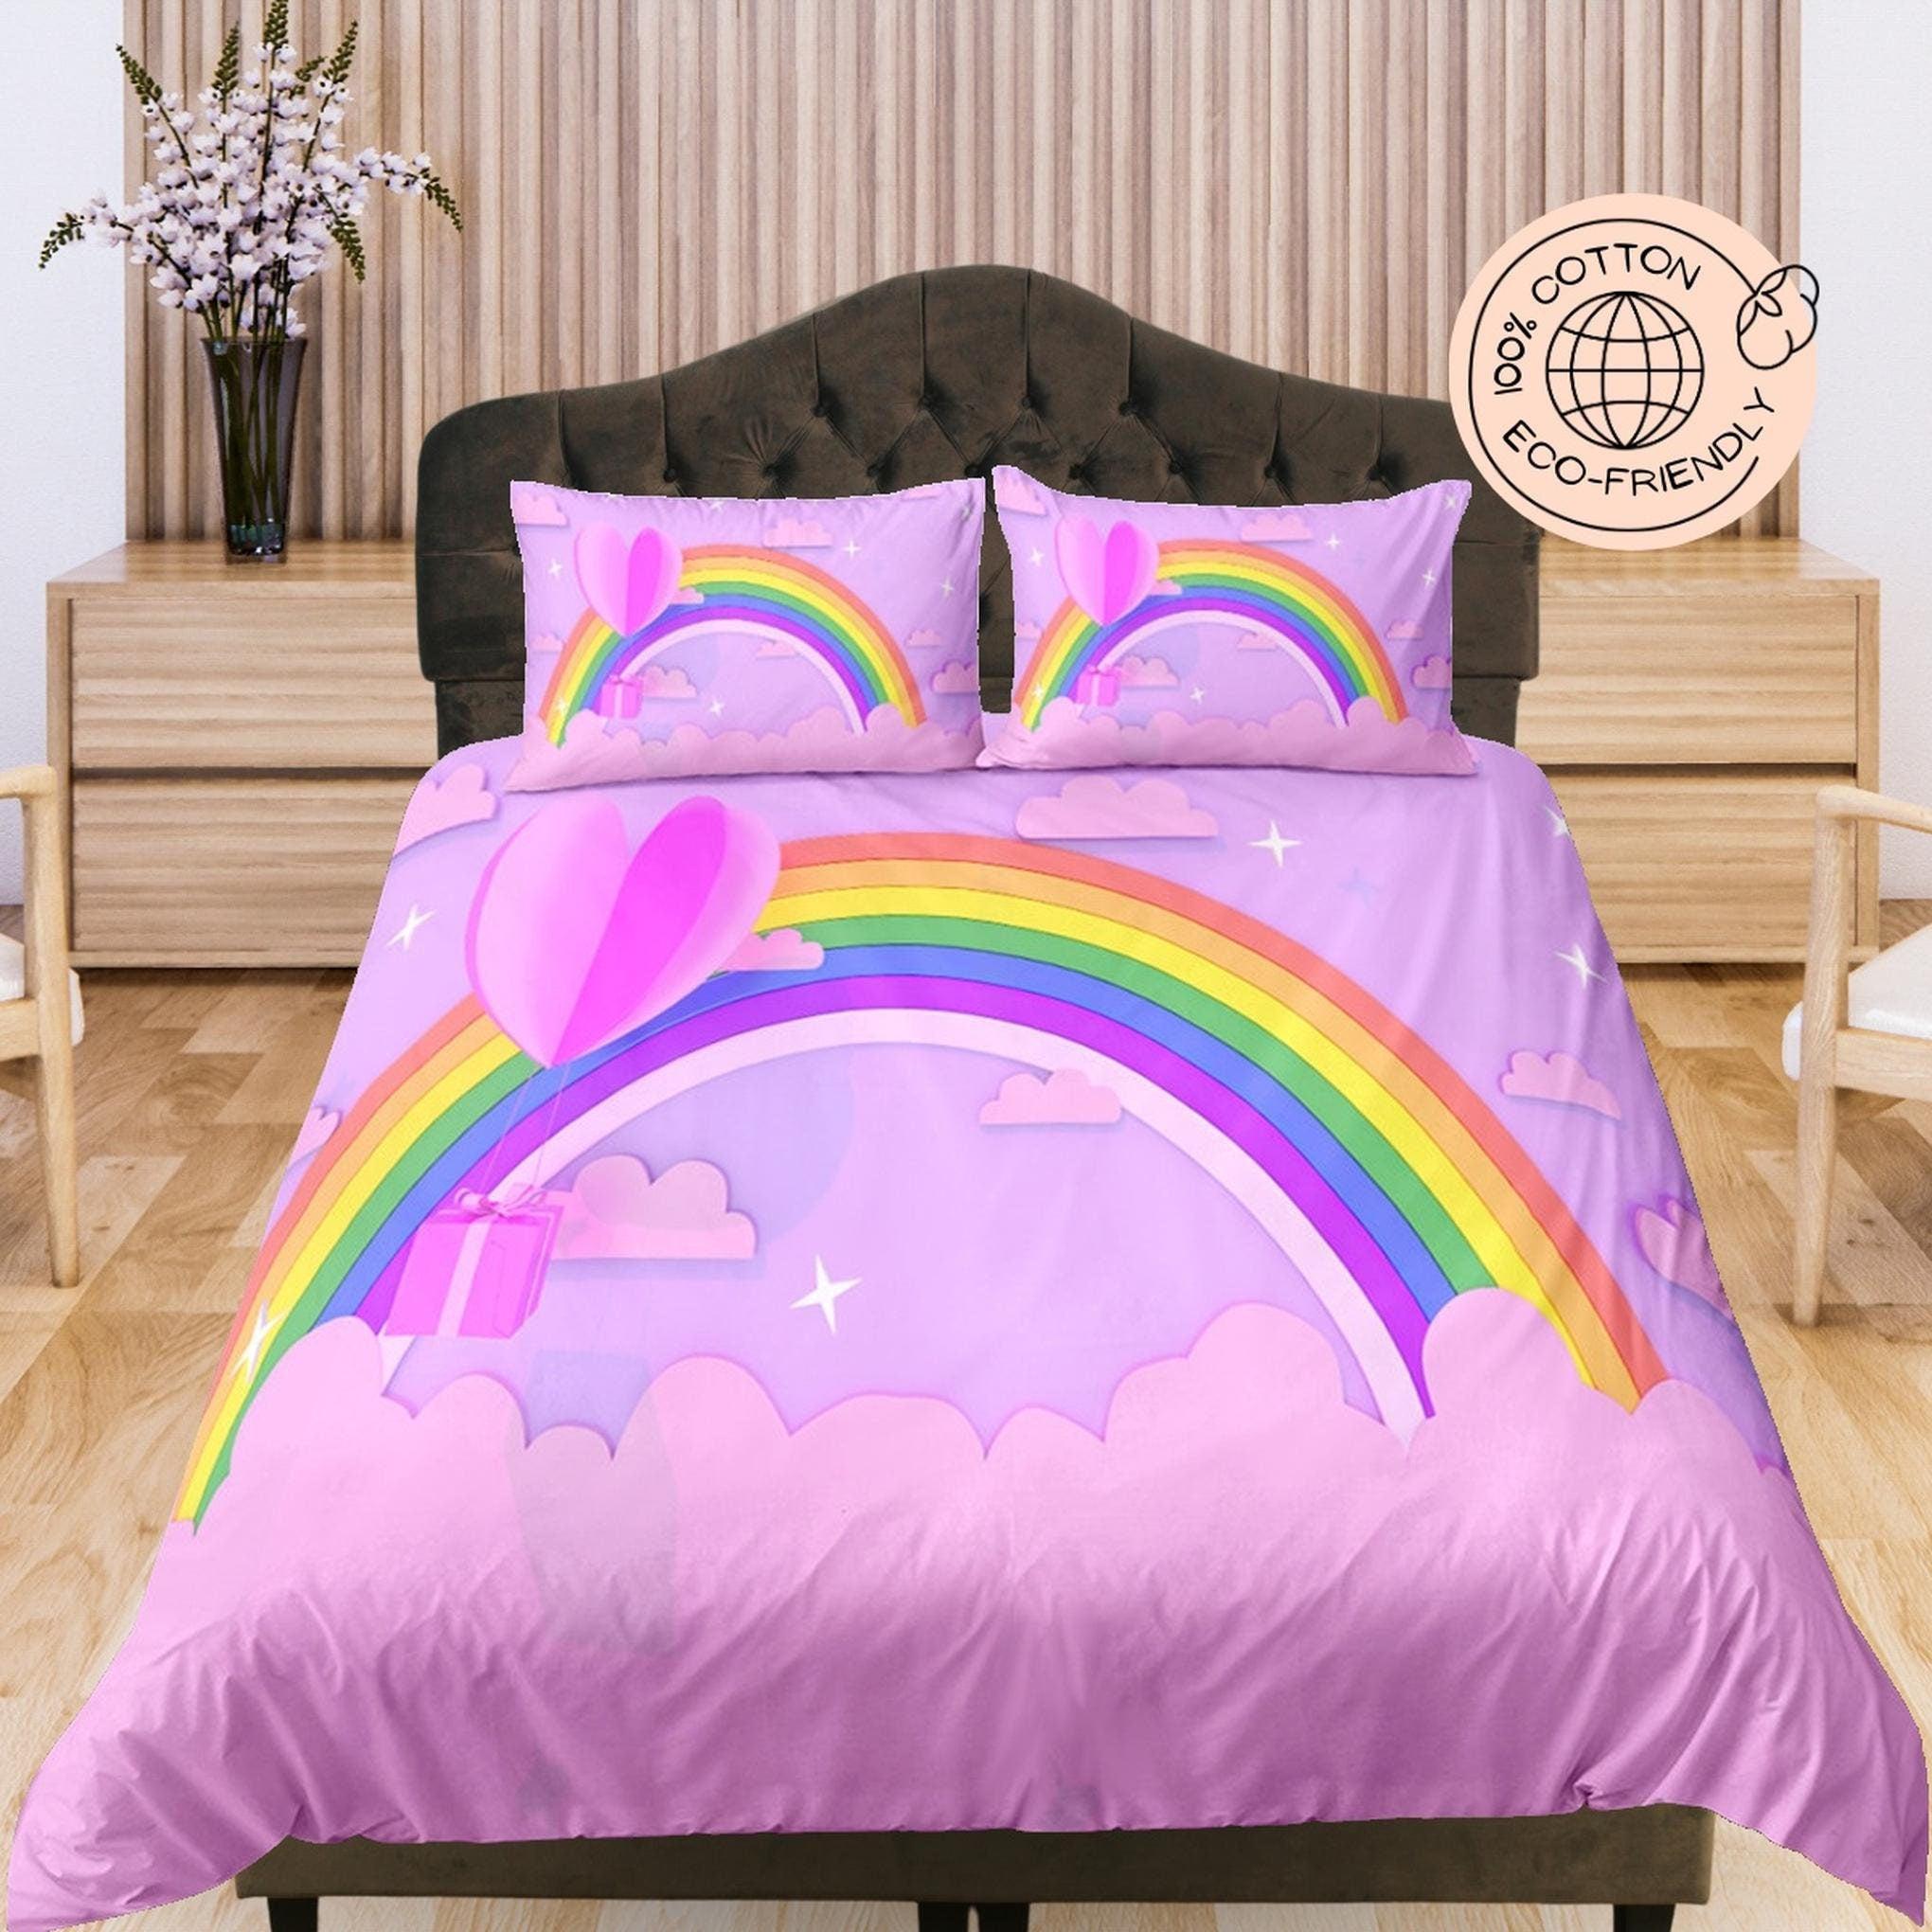 daintyduvet Rainbow Cotton Duvet Cover Set for Kids, Pink Toddler Bedding, Baby Girl Zipper Bedding, Nursery Cotton Bedding, Colorful Crib Blanket